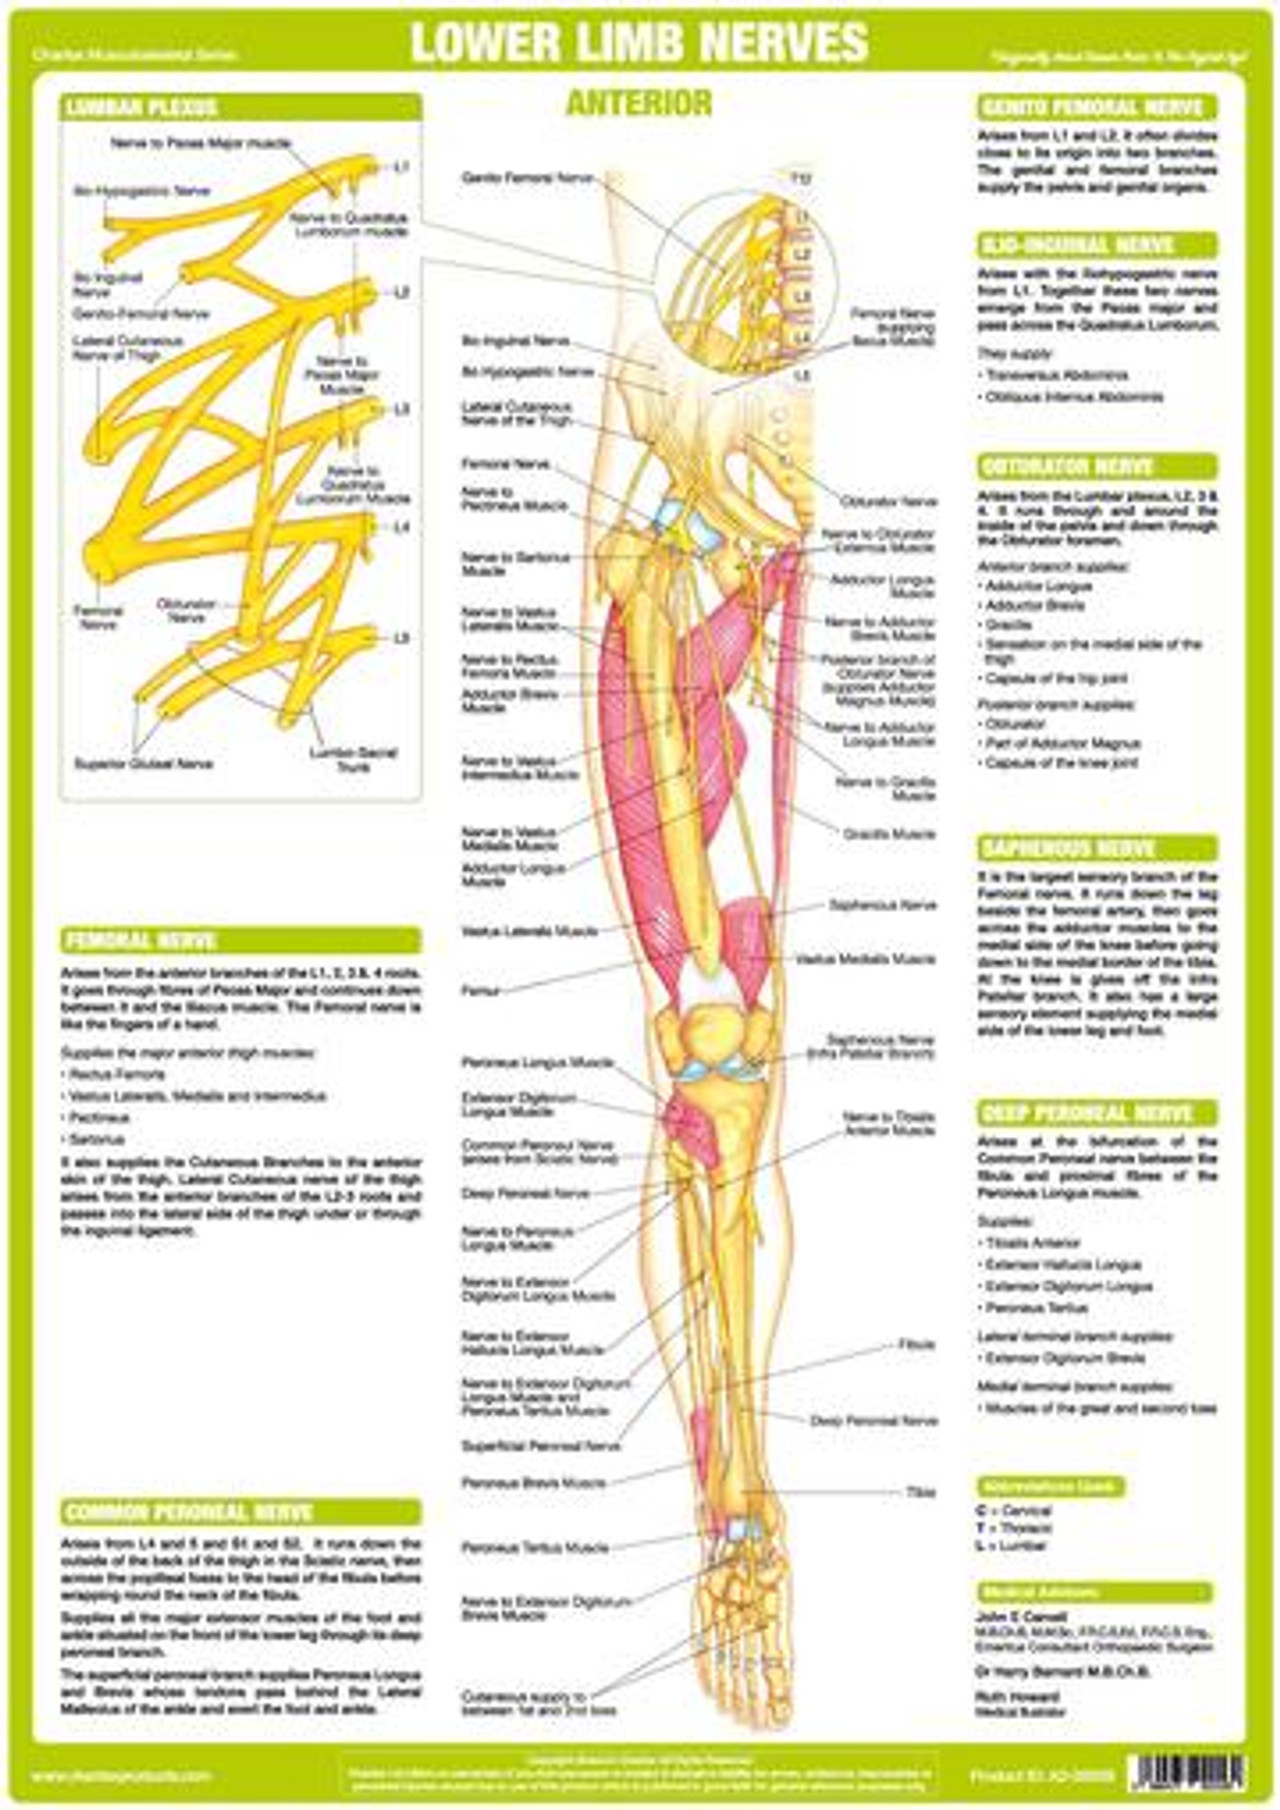 Lower Limb Nerves Posterior Podiacare Ltd